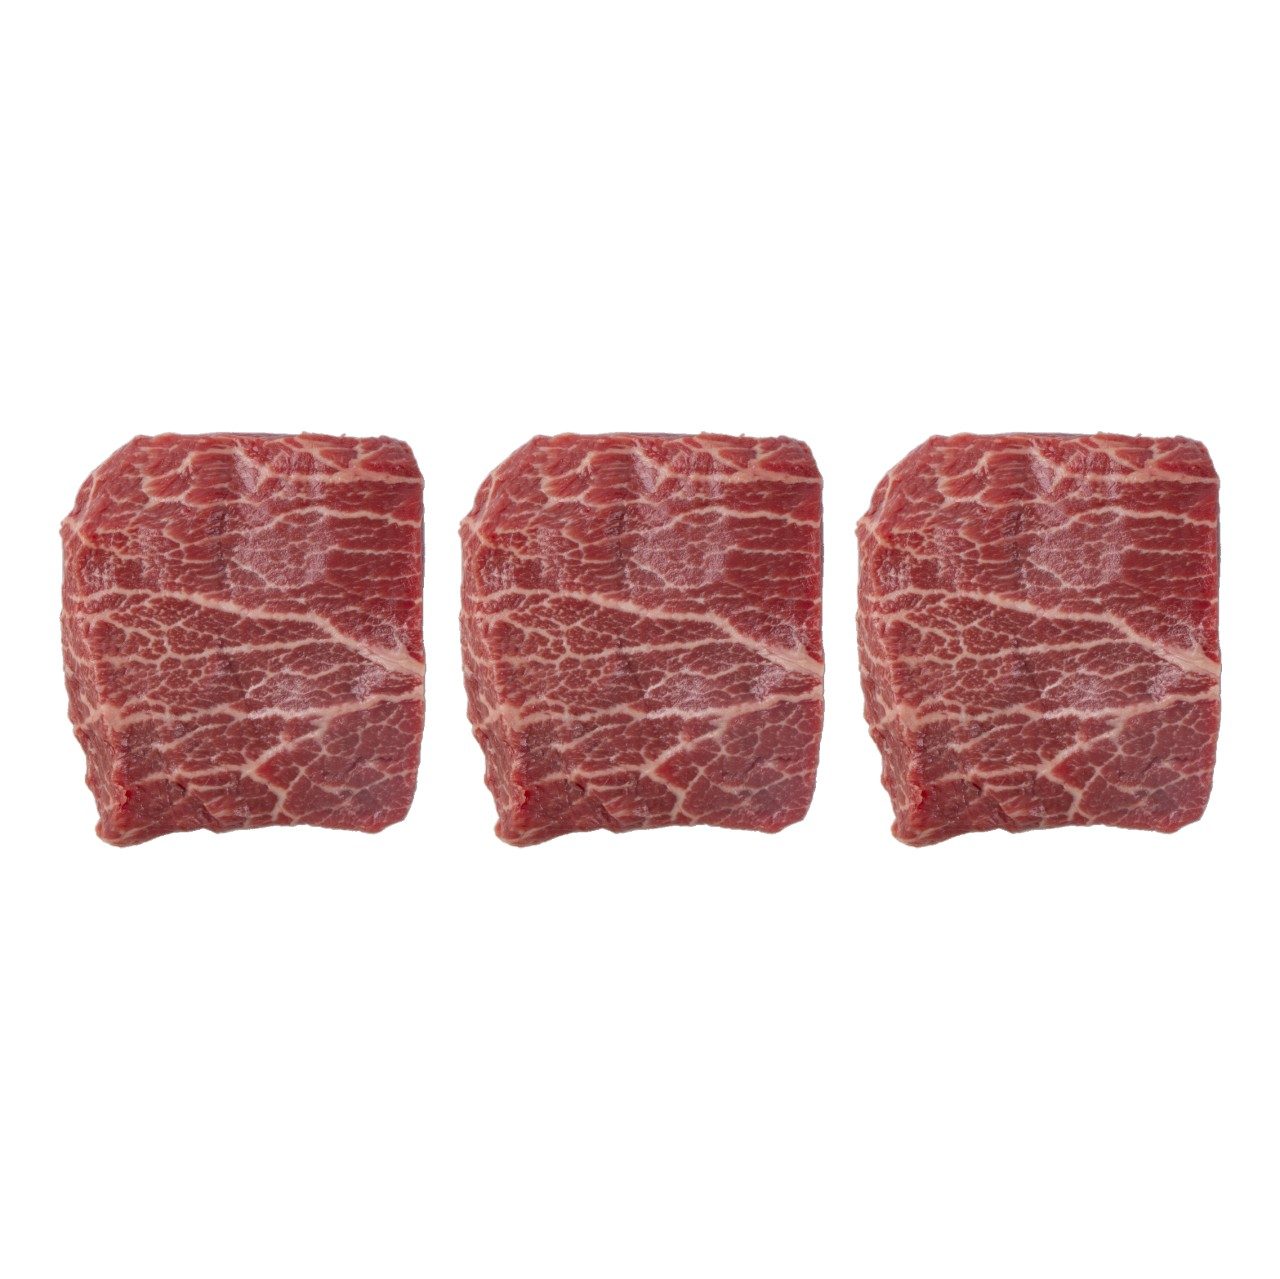 Grainfed runder flat iron steak Uruguay